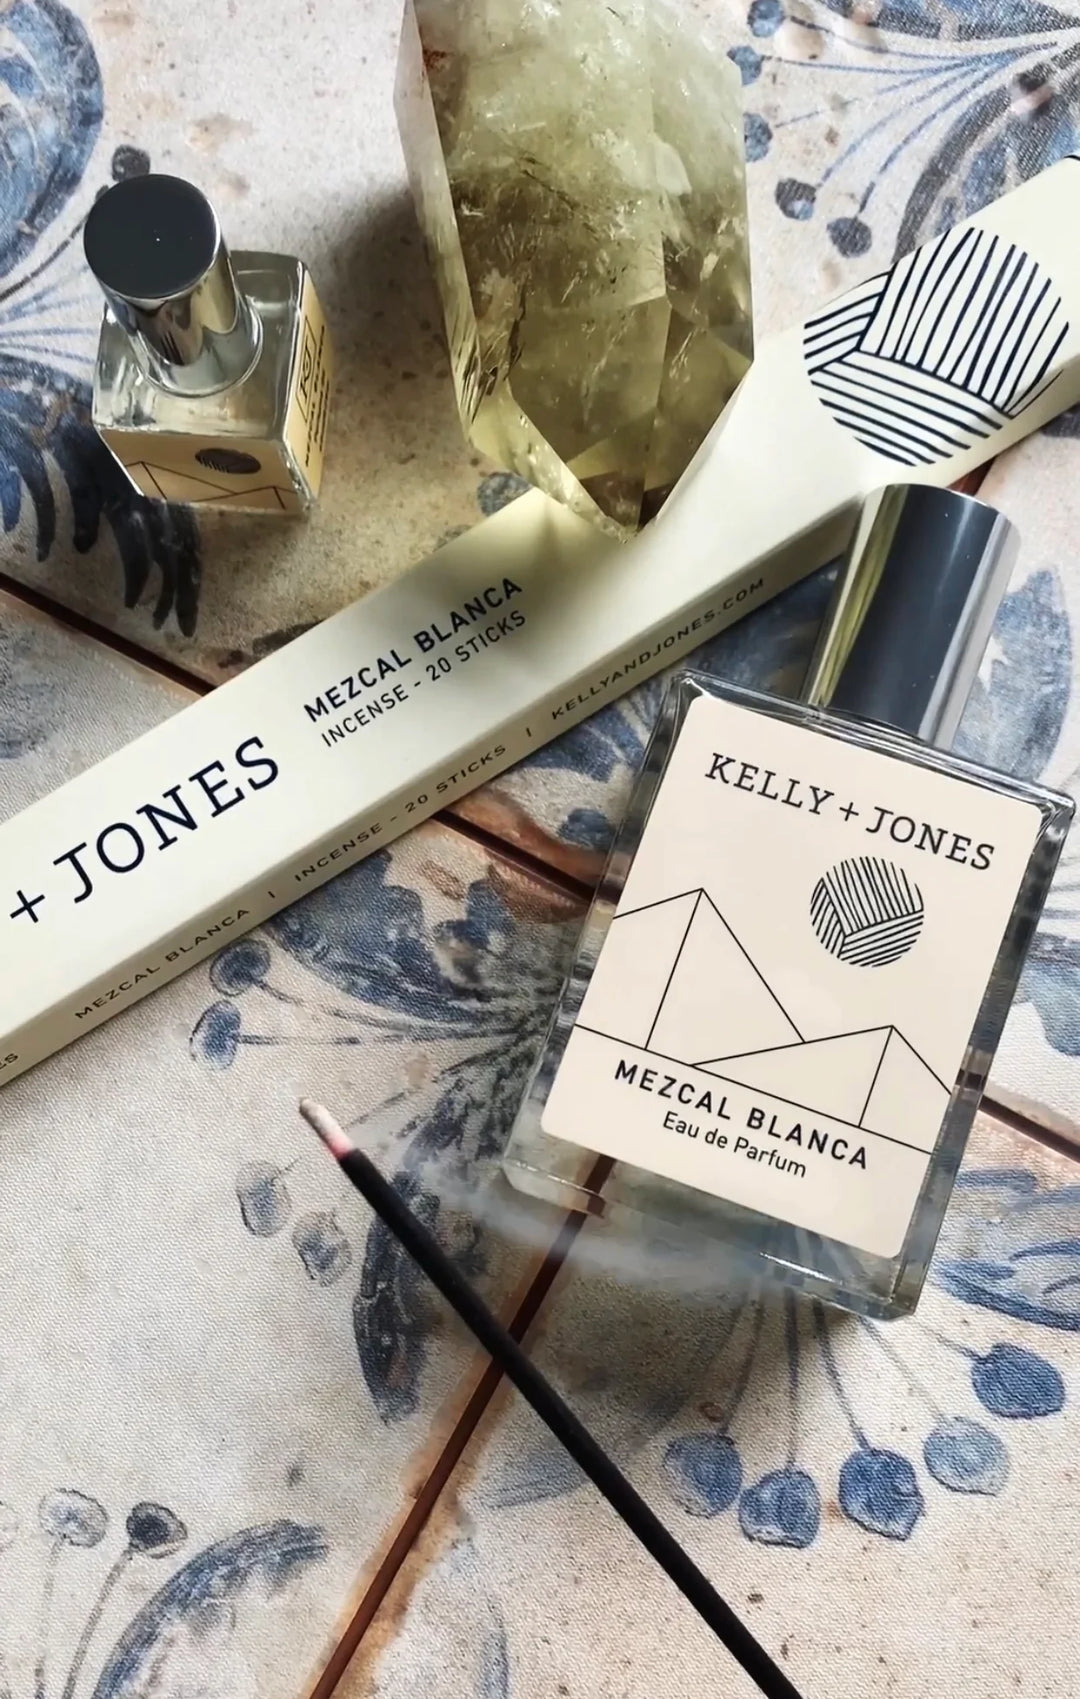 Kelly + Jones Mezcal Incense